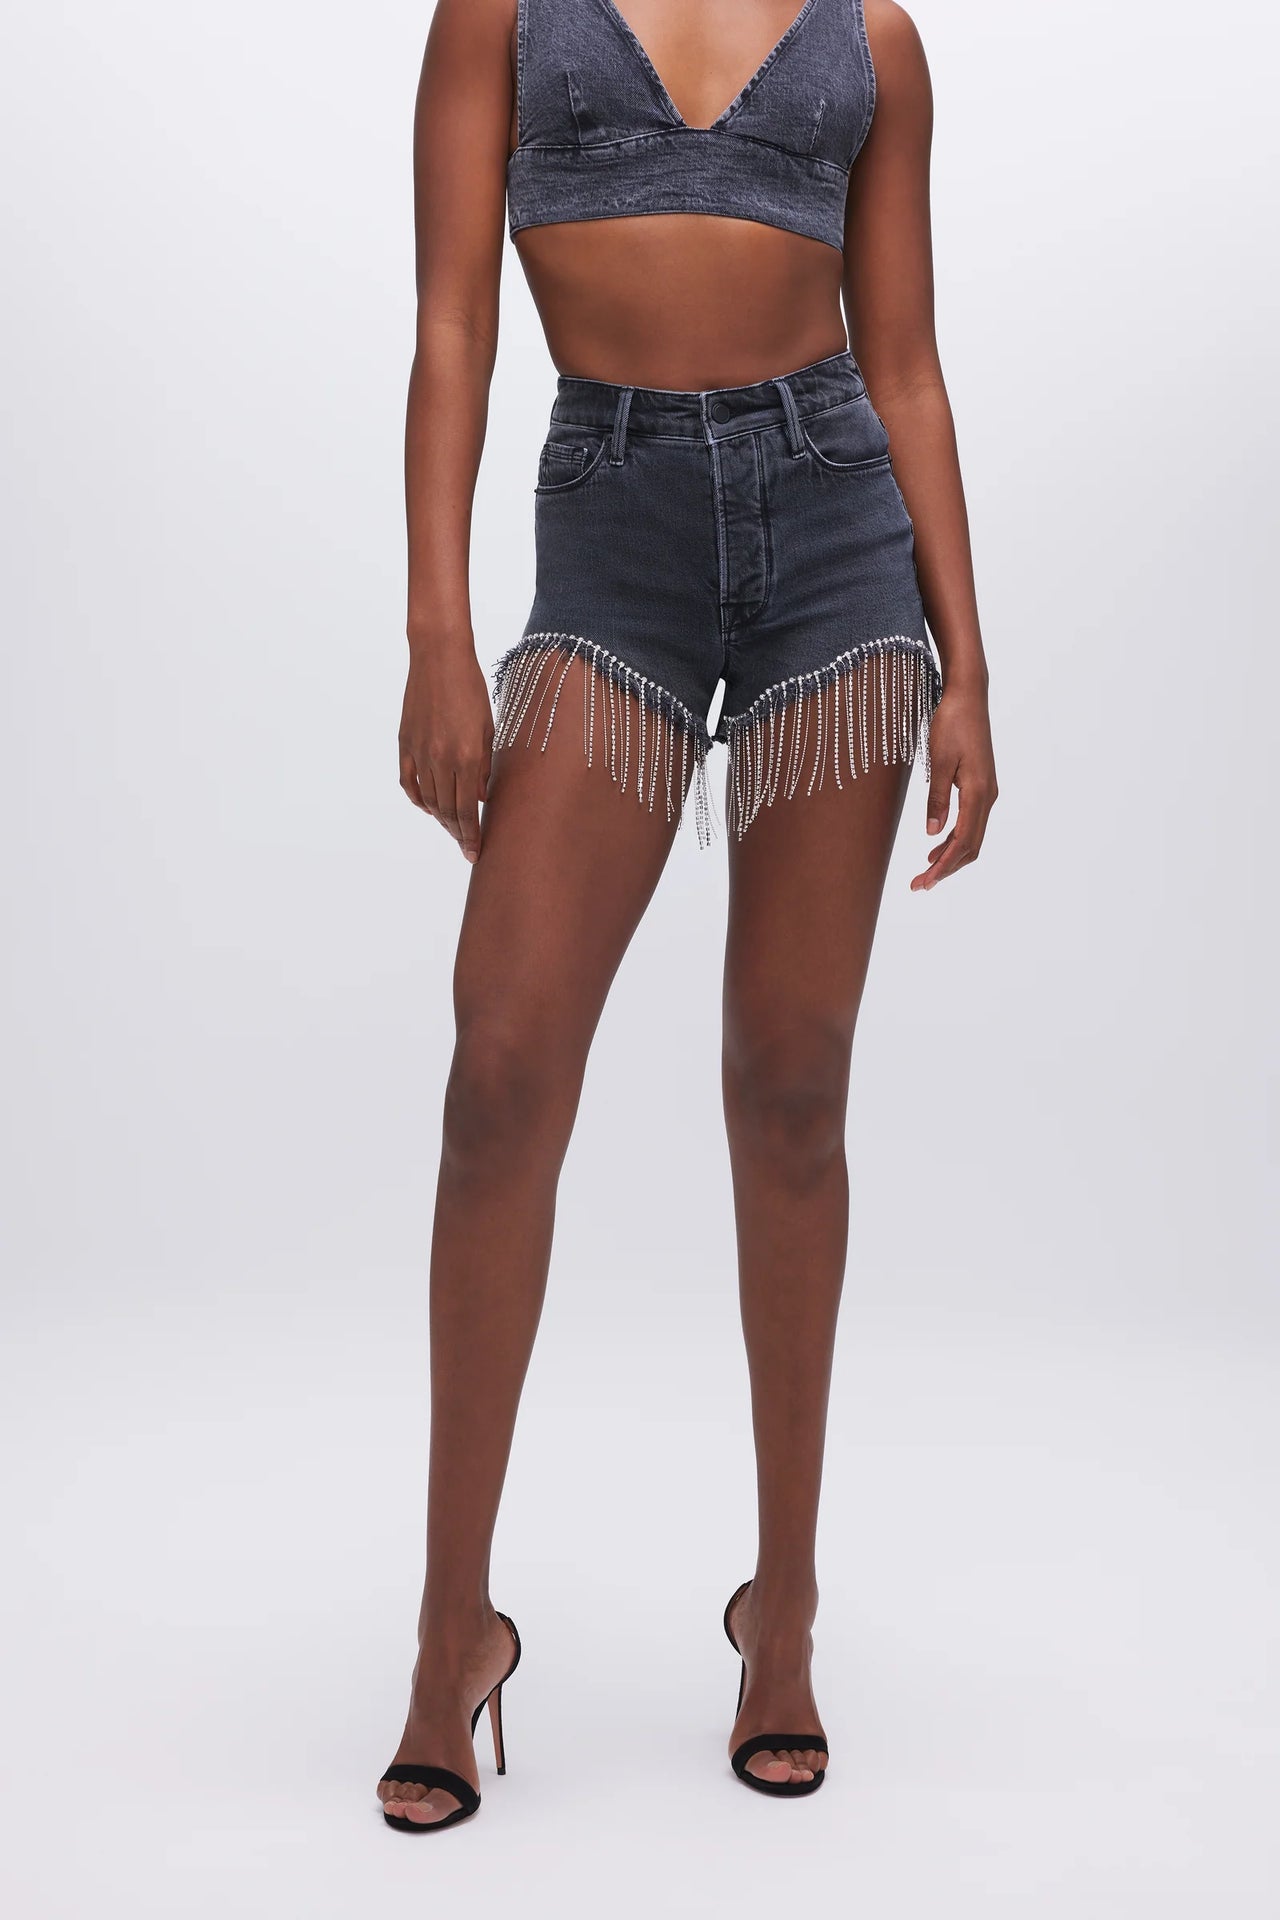 Diamond Bombshell Shorts Black, Denim Shorts by Good American | LIT Boutique